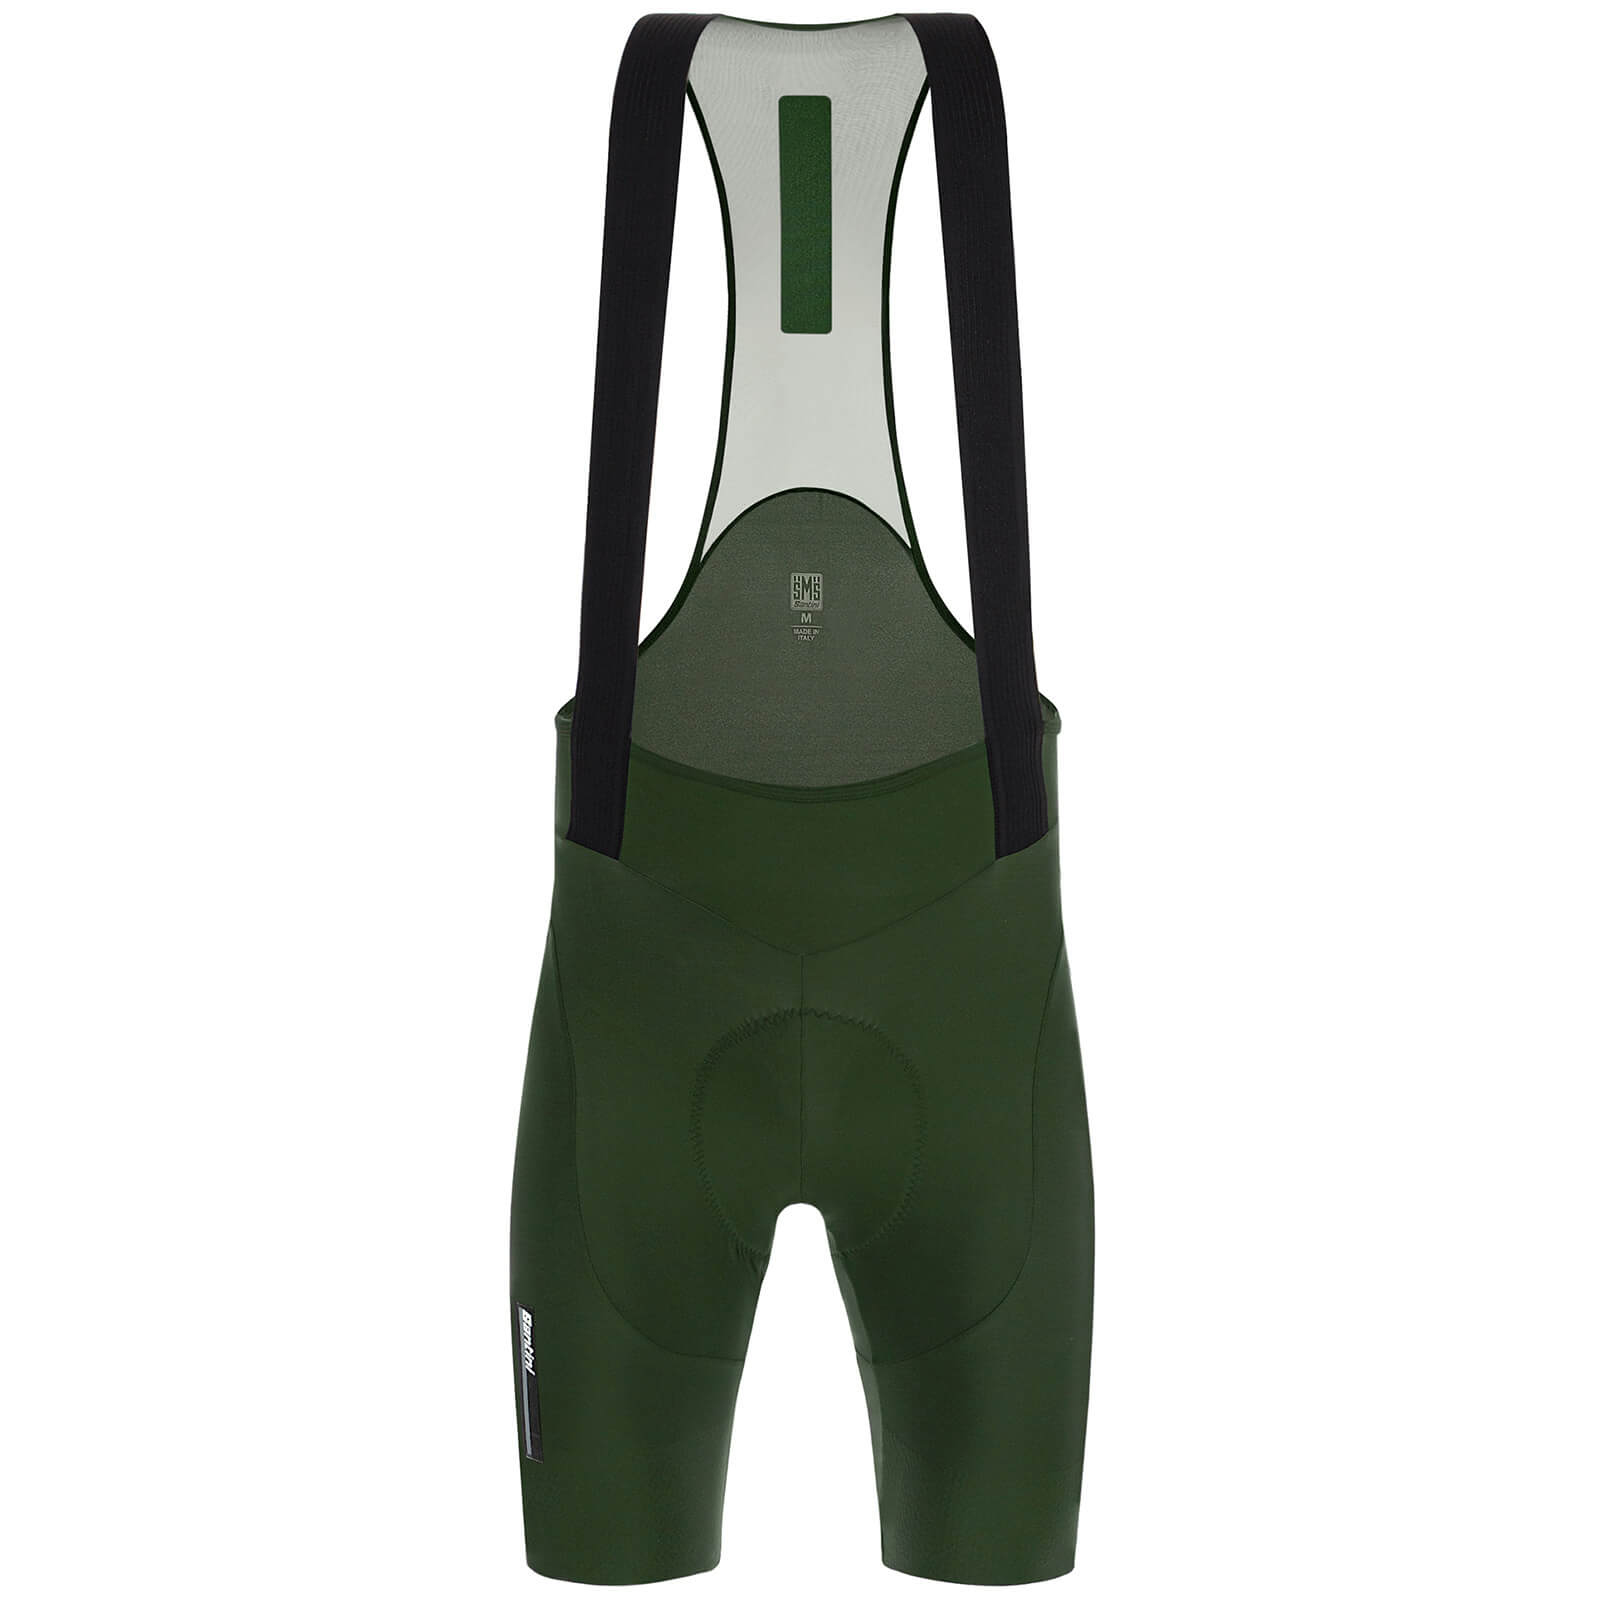 Santini Tono Dinamo Bib Shorts - S - Military Green